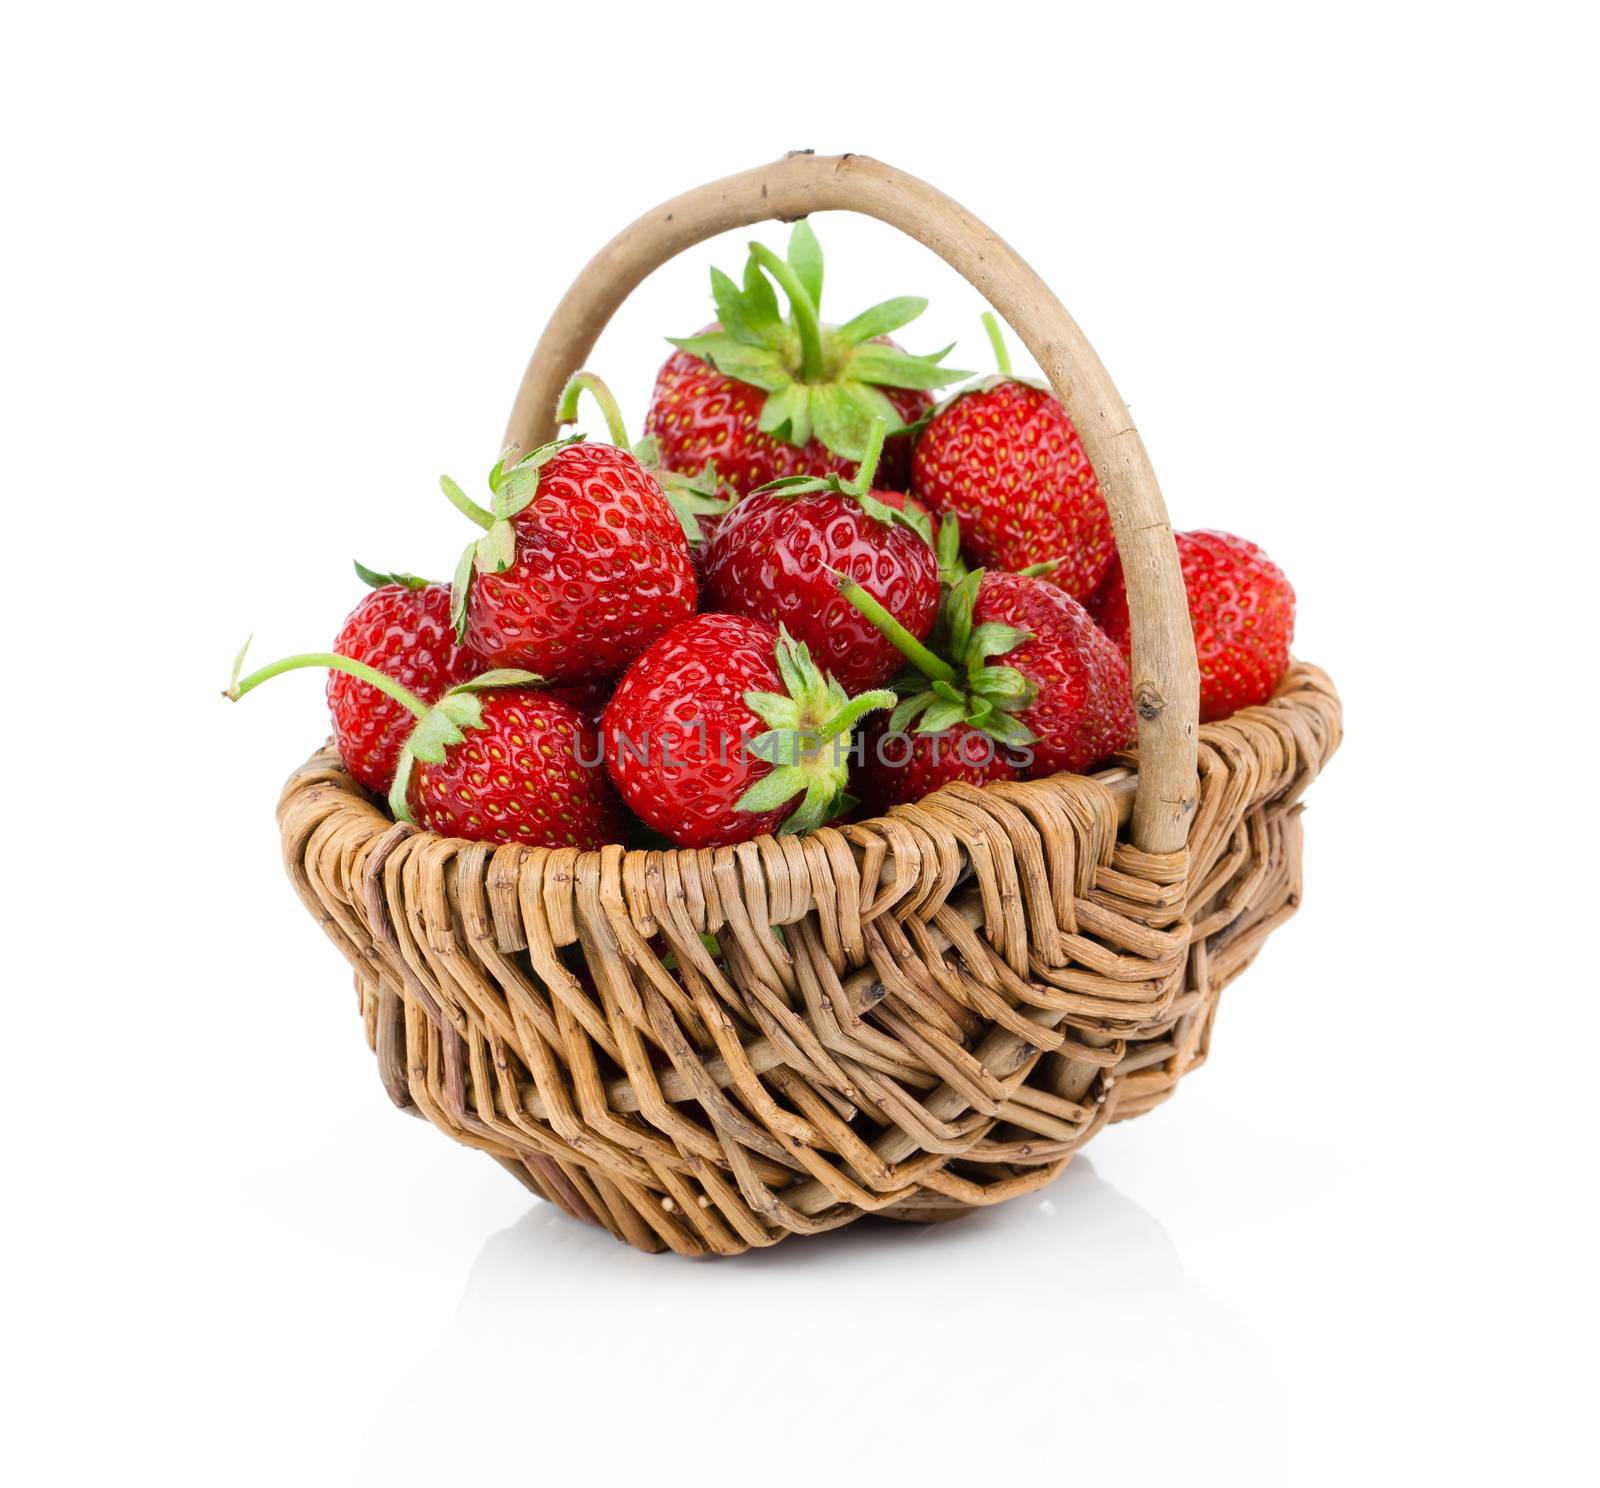 fresh Strawberries in basket on white background by motorolka